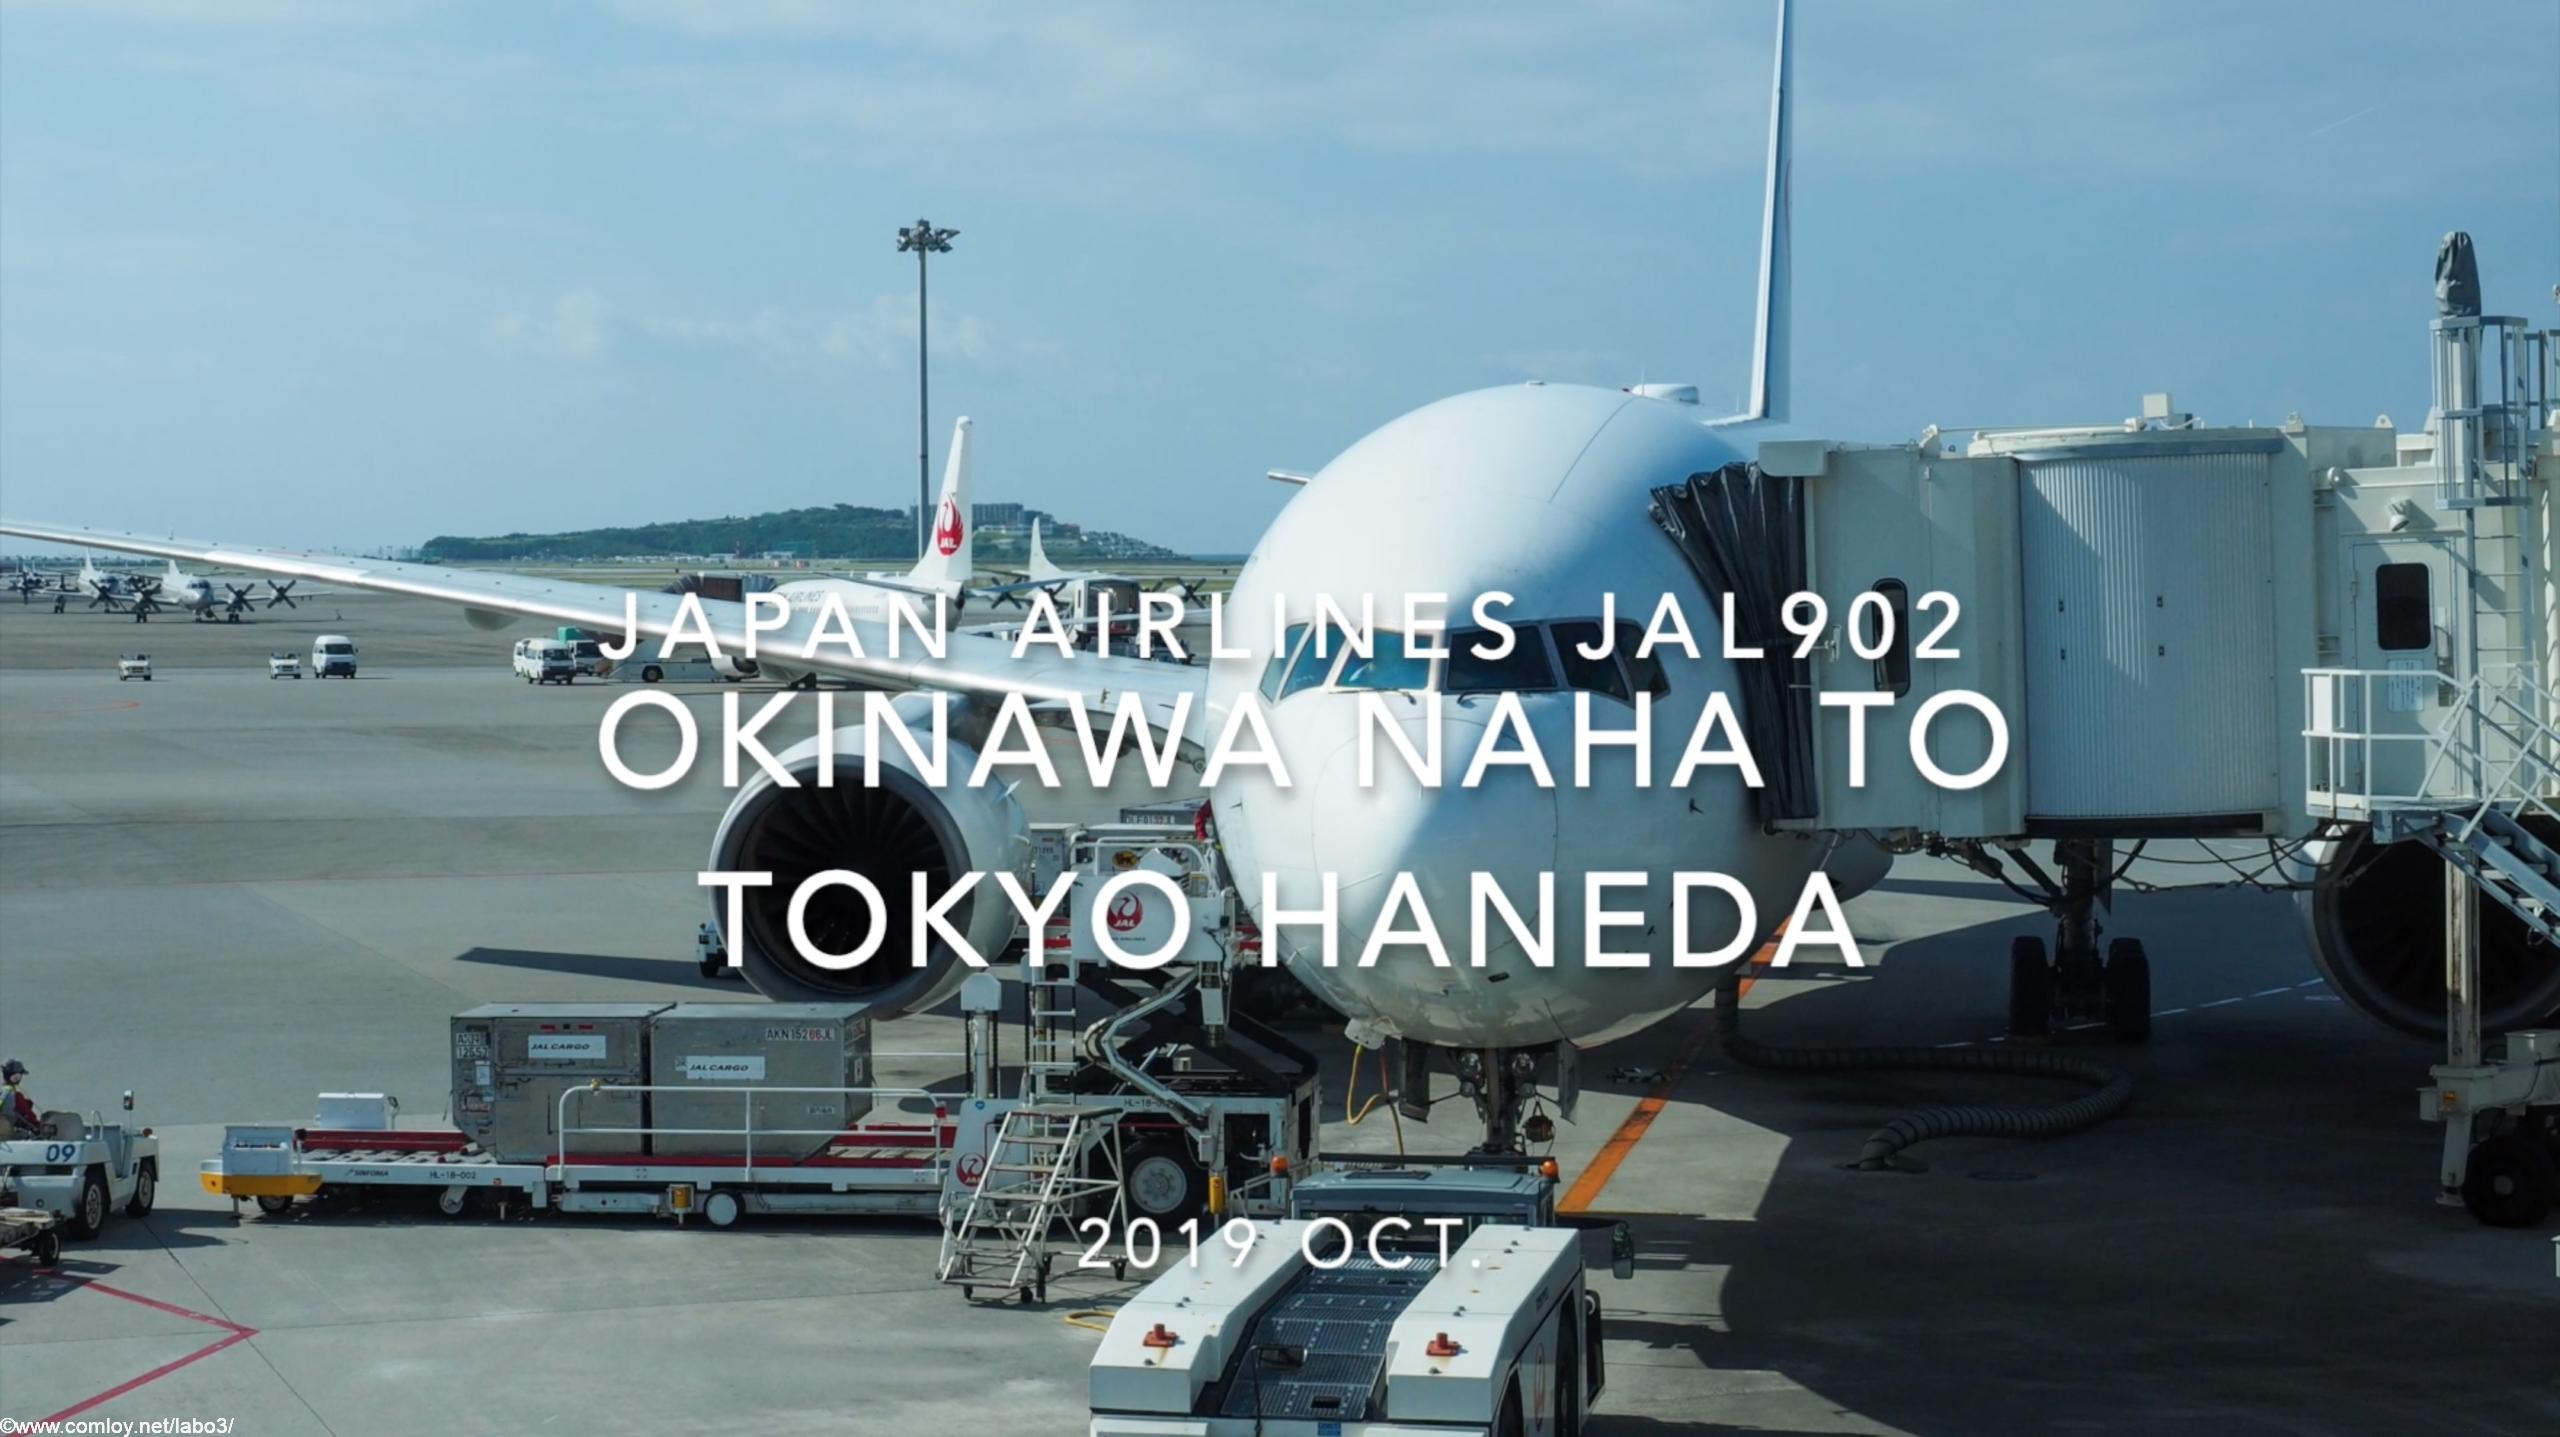 【Flight Report】2019 Oct Japan airlines JAL902 OKINAWA NAHA TO TOKYO HANEDA 日本航空 那覇 - 羽田 搭乗記